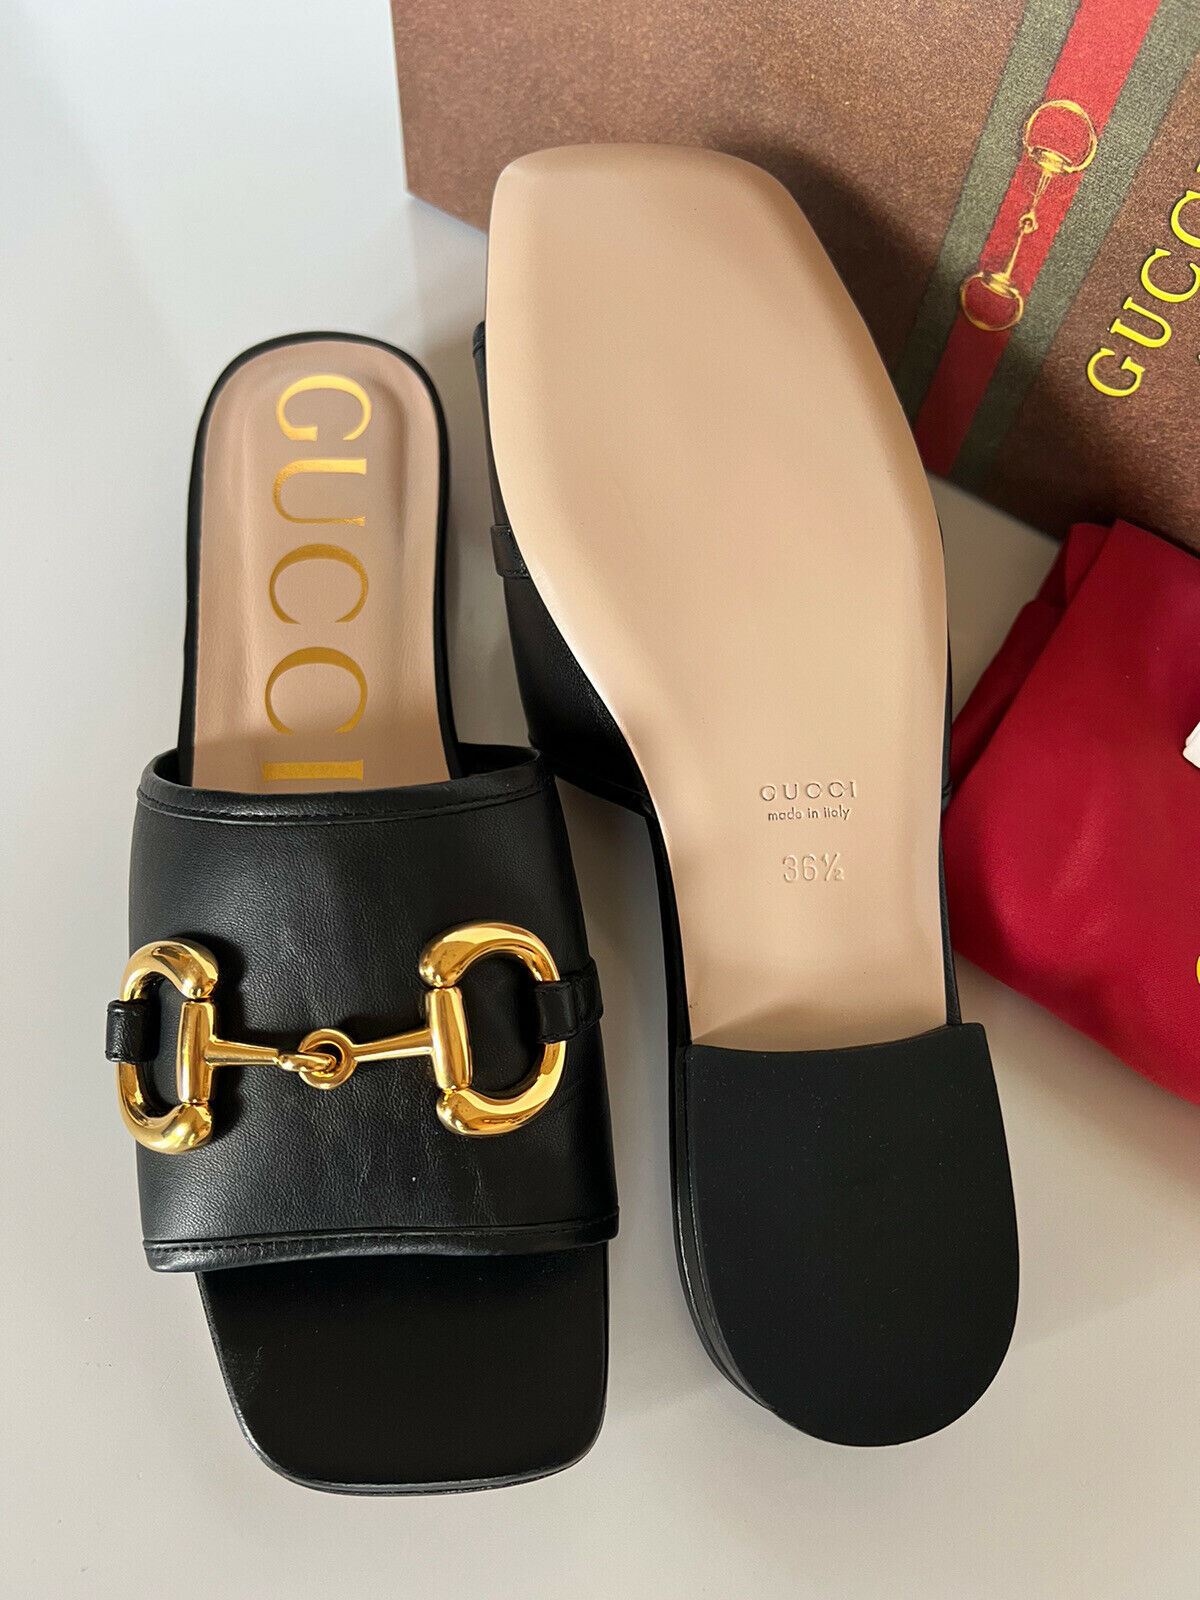 NIB Gucci Women's Horsebit Black Sandal 6.5 US (36.5 Euro) Made in Italy 623111